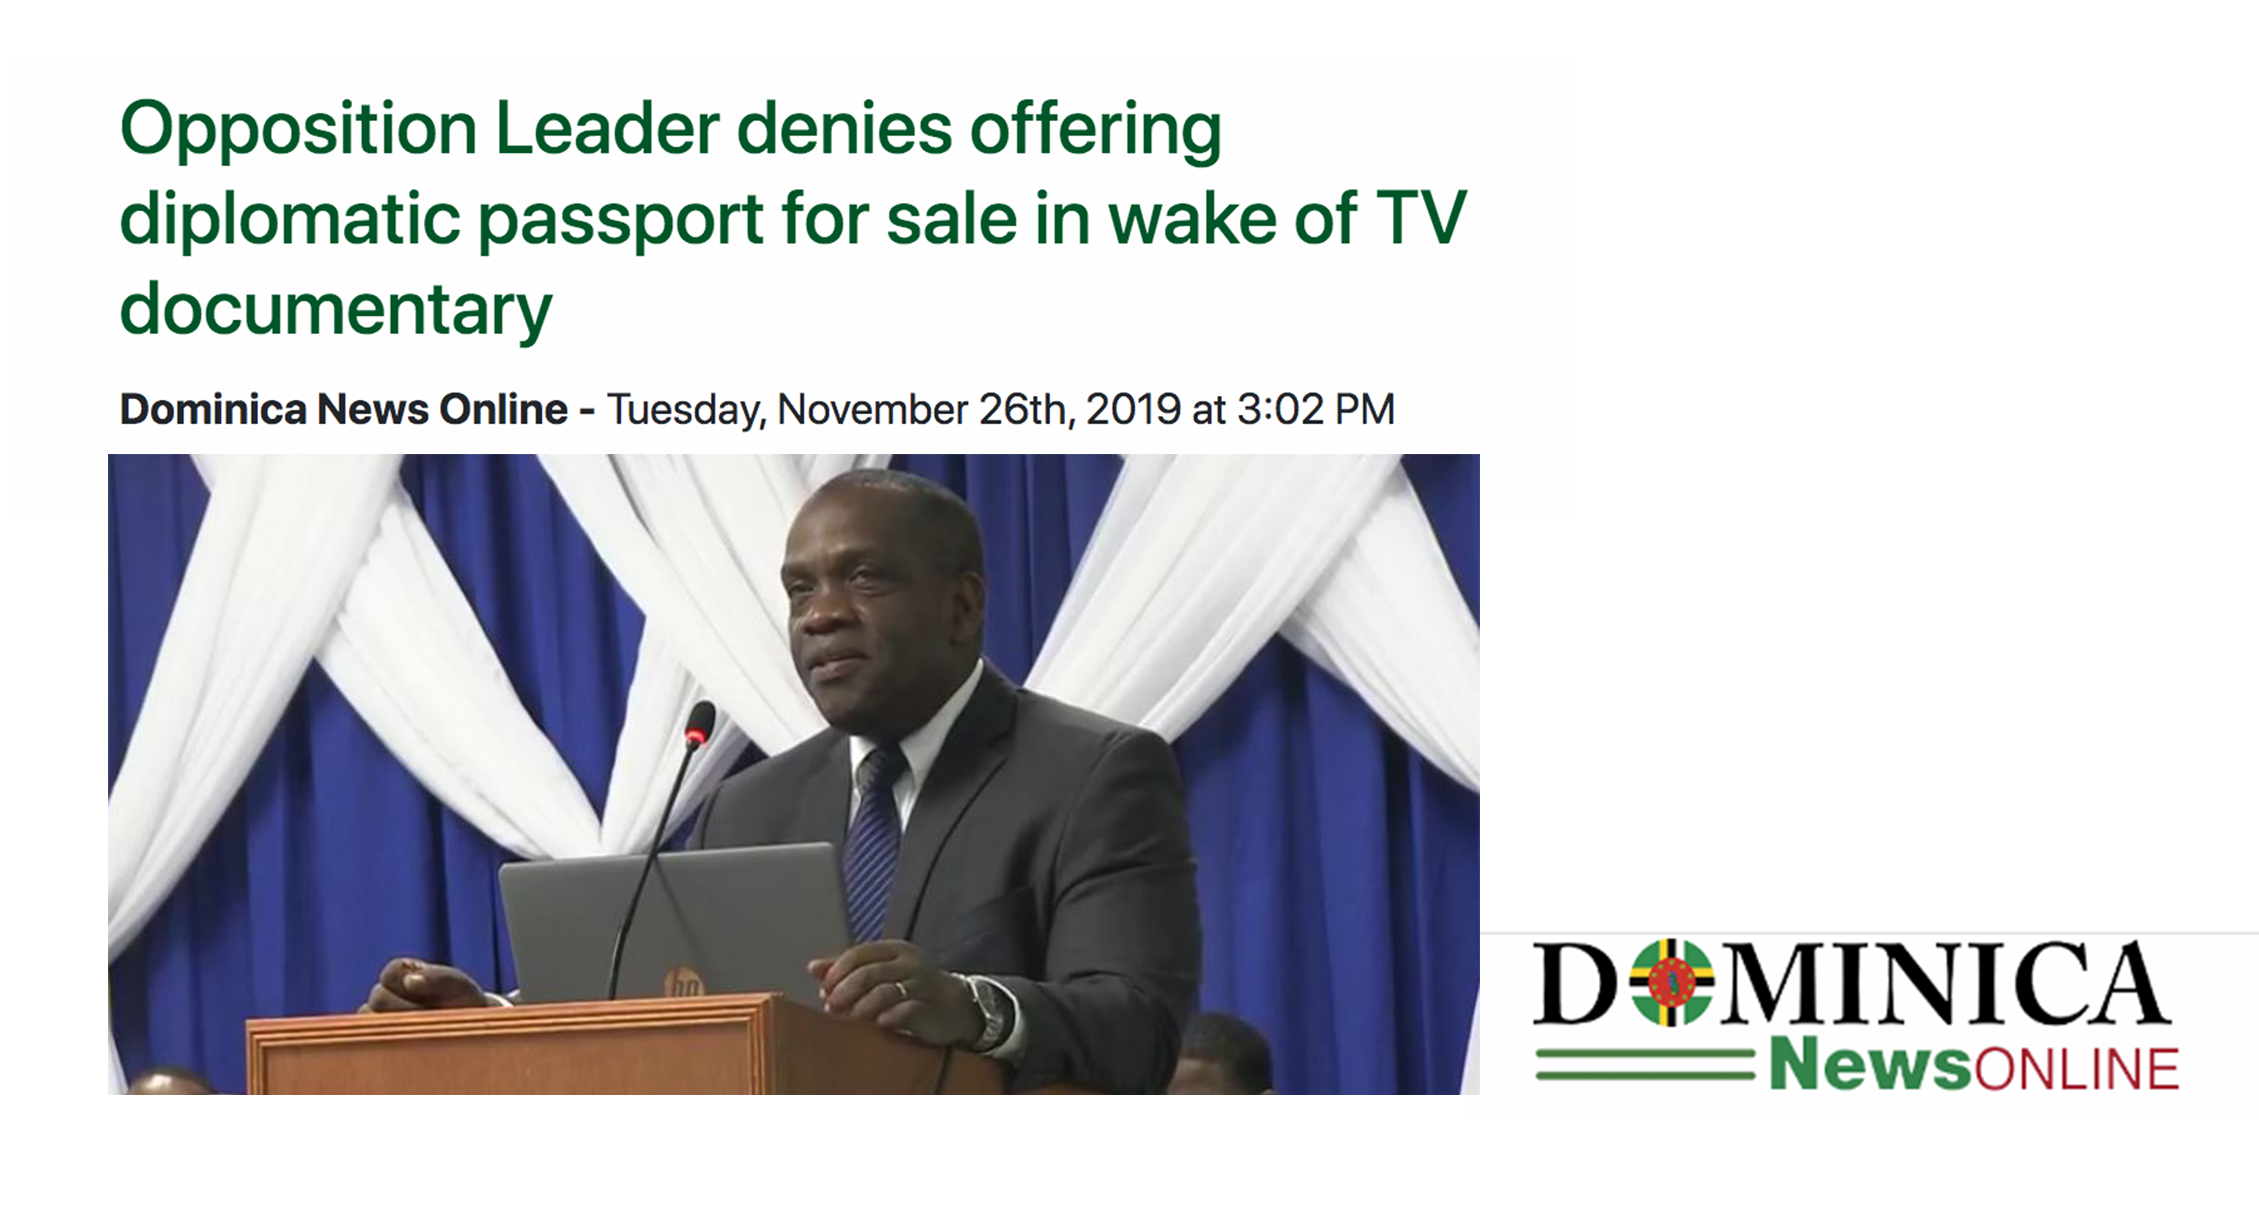 Dominica News Online: Opposition Leader denies offering diplomatic passport